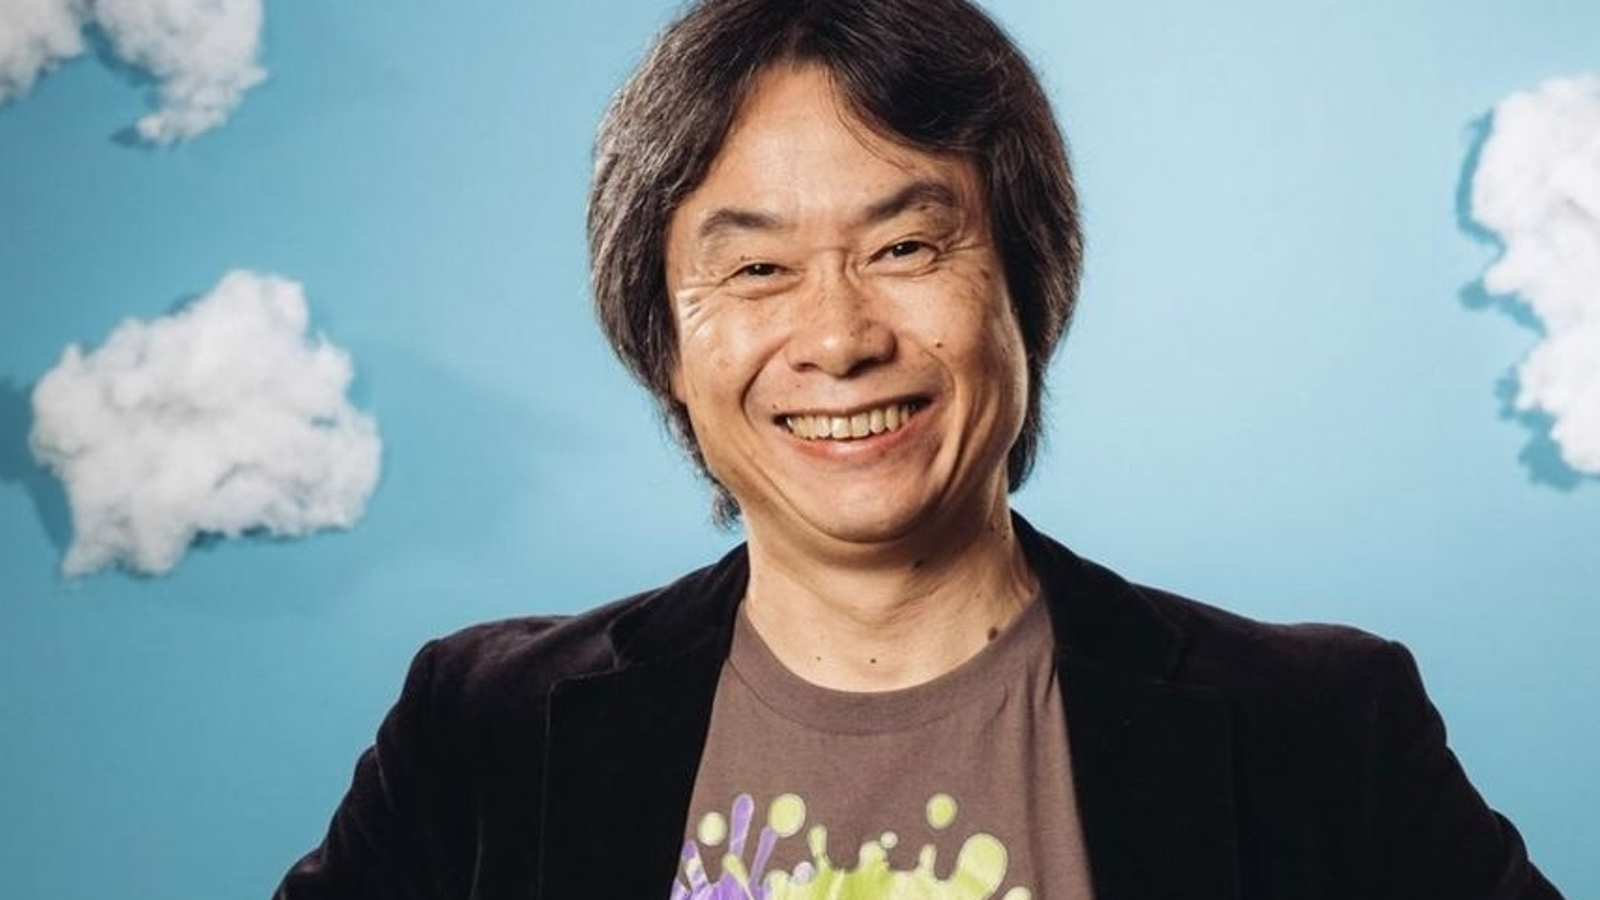 Retrô entrevistas: Shigeru Miyamoto, 2001 - Memória BIT